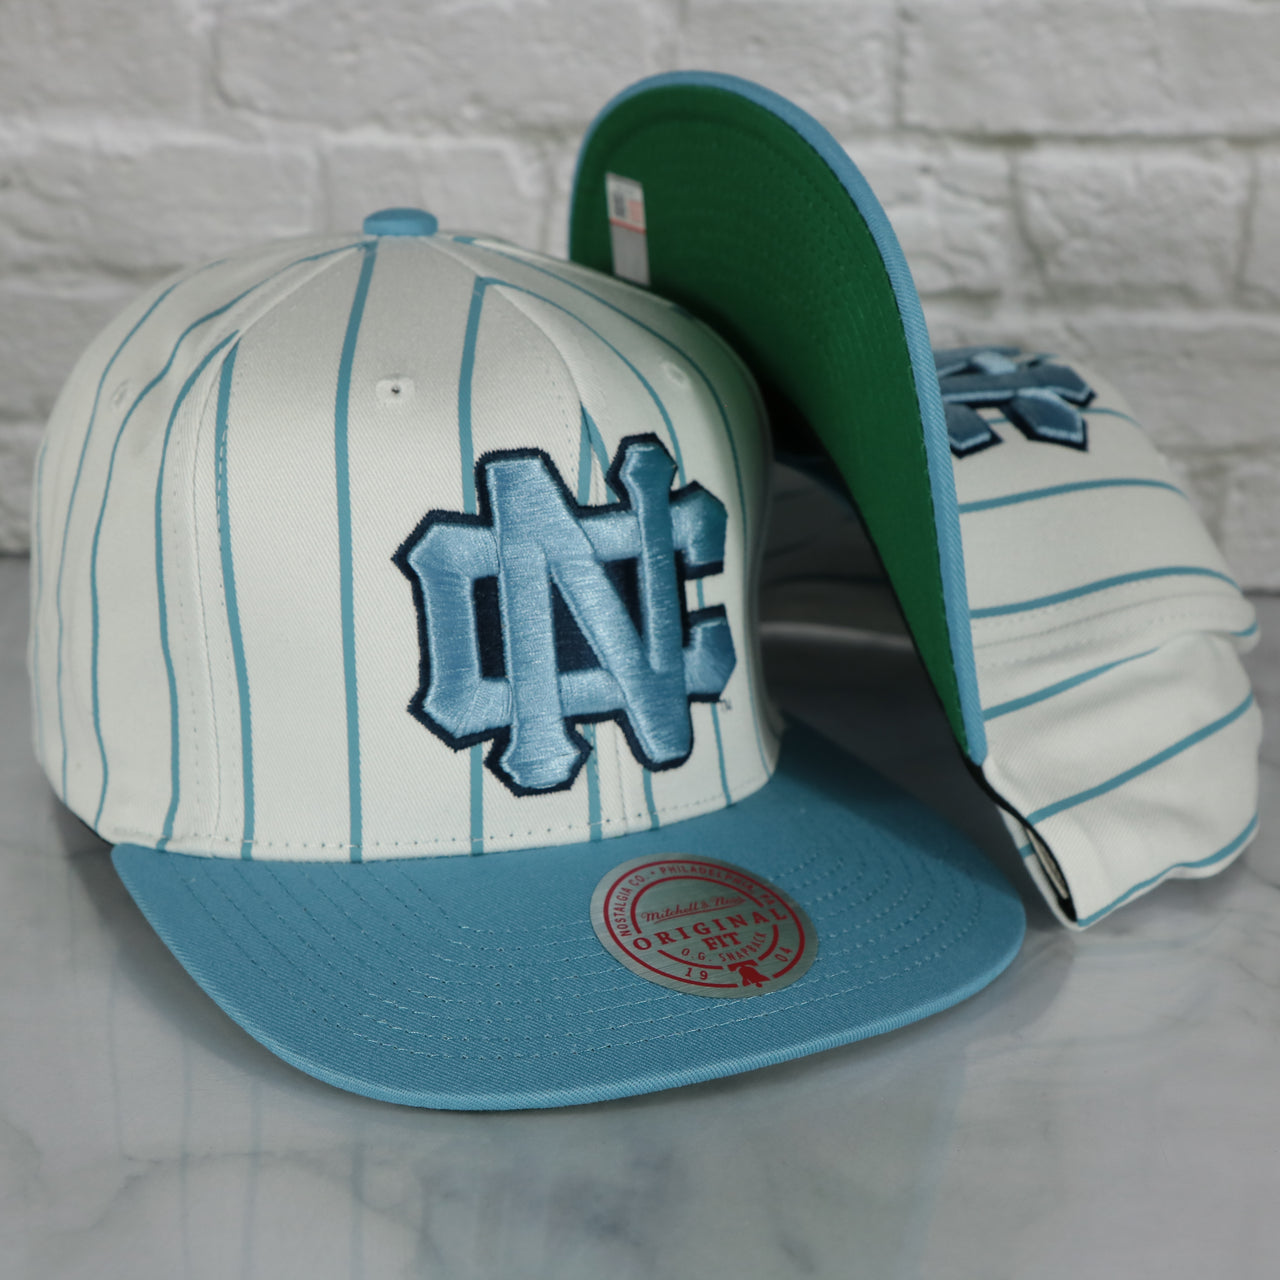 University of North Carolina Tar Heels Vintage Pinstripe Baseball Hat | Retro Mitchell and Ness White Pinstripe Snapback Hat